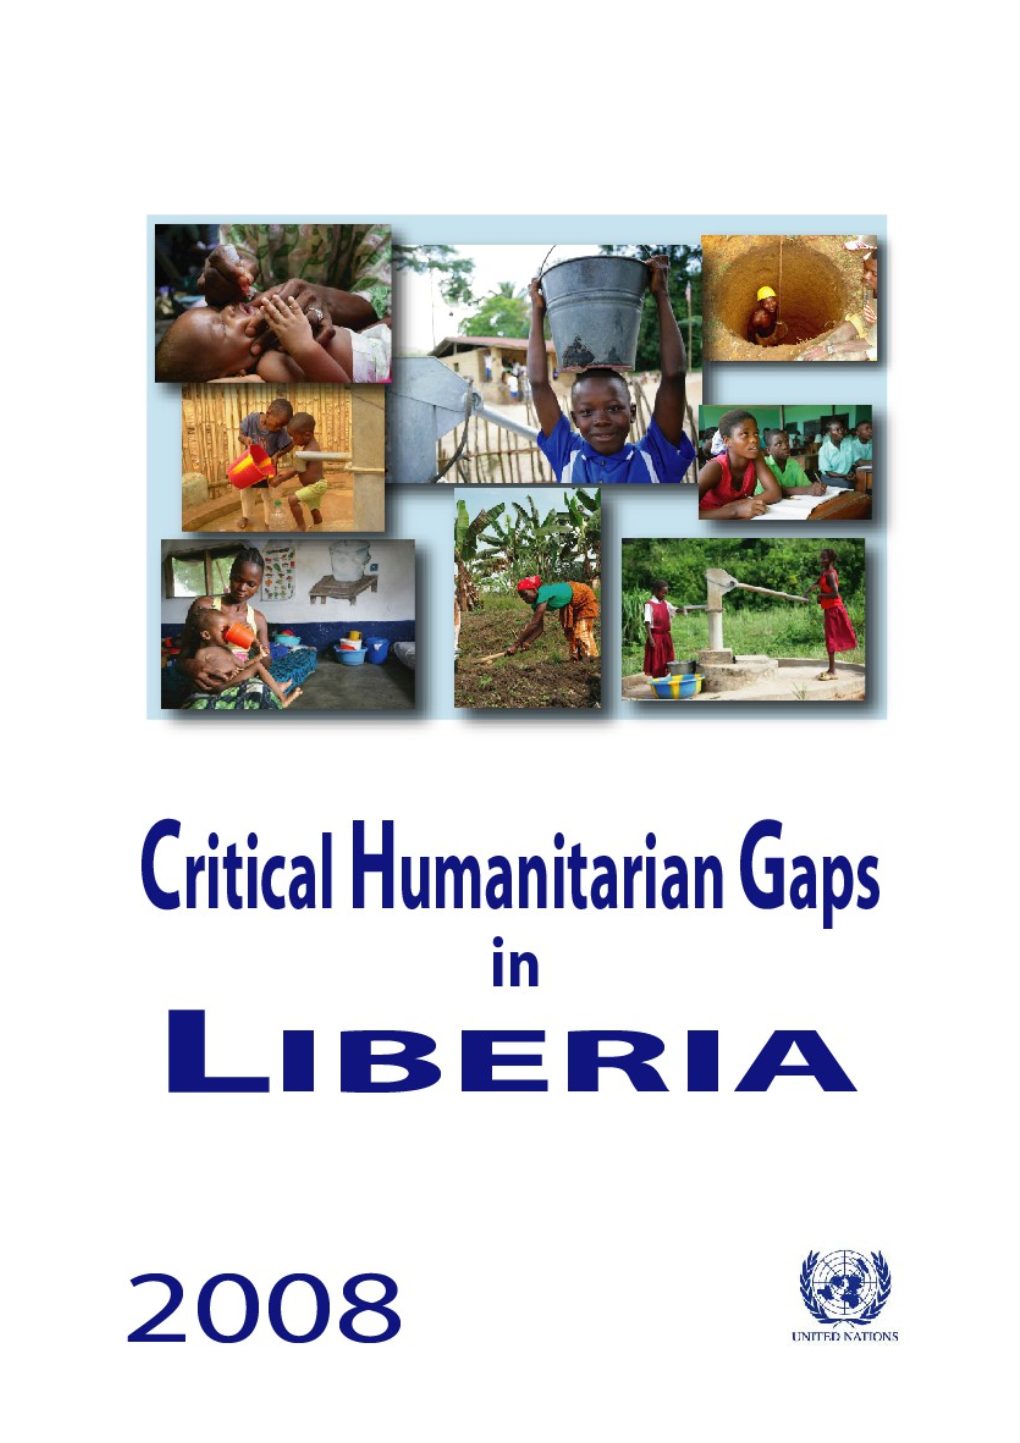 Critical Humanitarian Gaps for Liberia 2008 (Word)